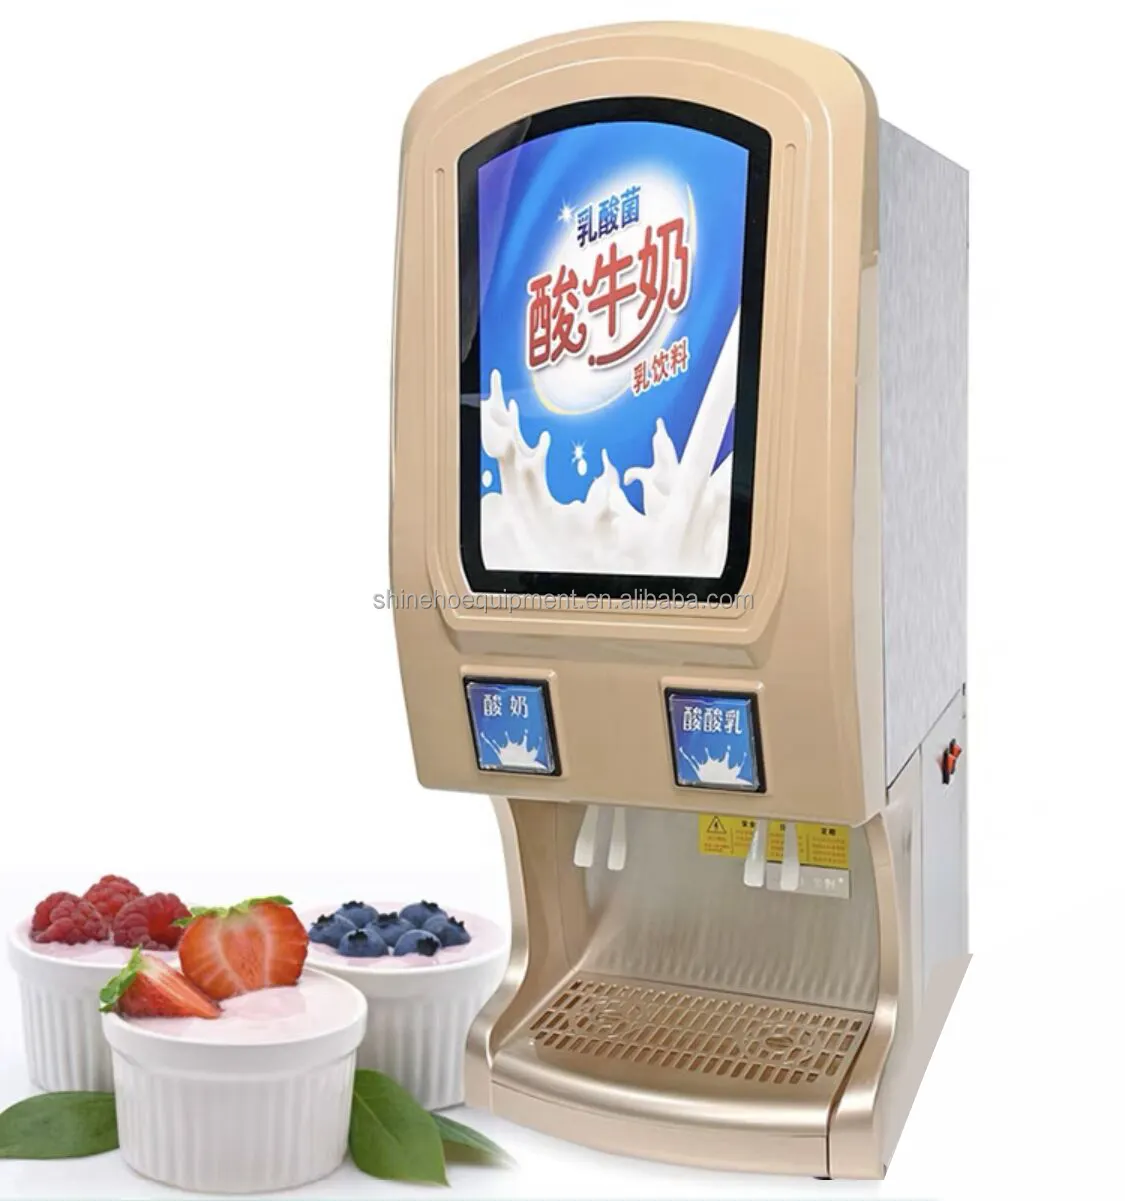 Soft Yogurt Frozen Serve Maker Commercial Making Dispenser prezzi Automatic Flavor Softy In India 3 One Shot Ice Cream Machine